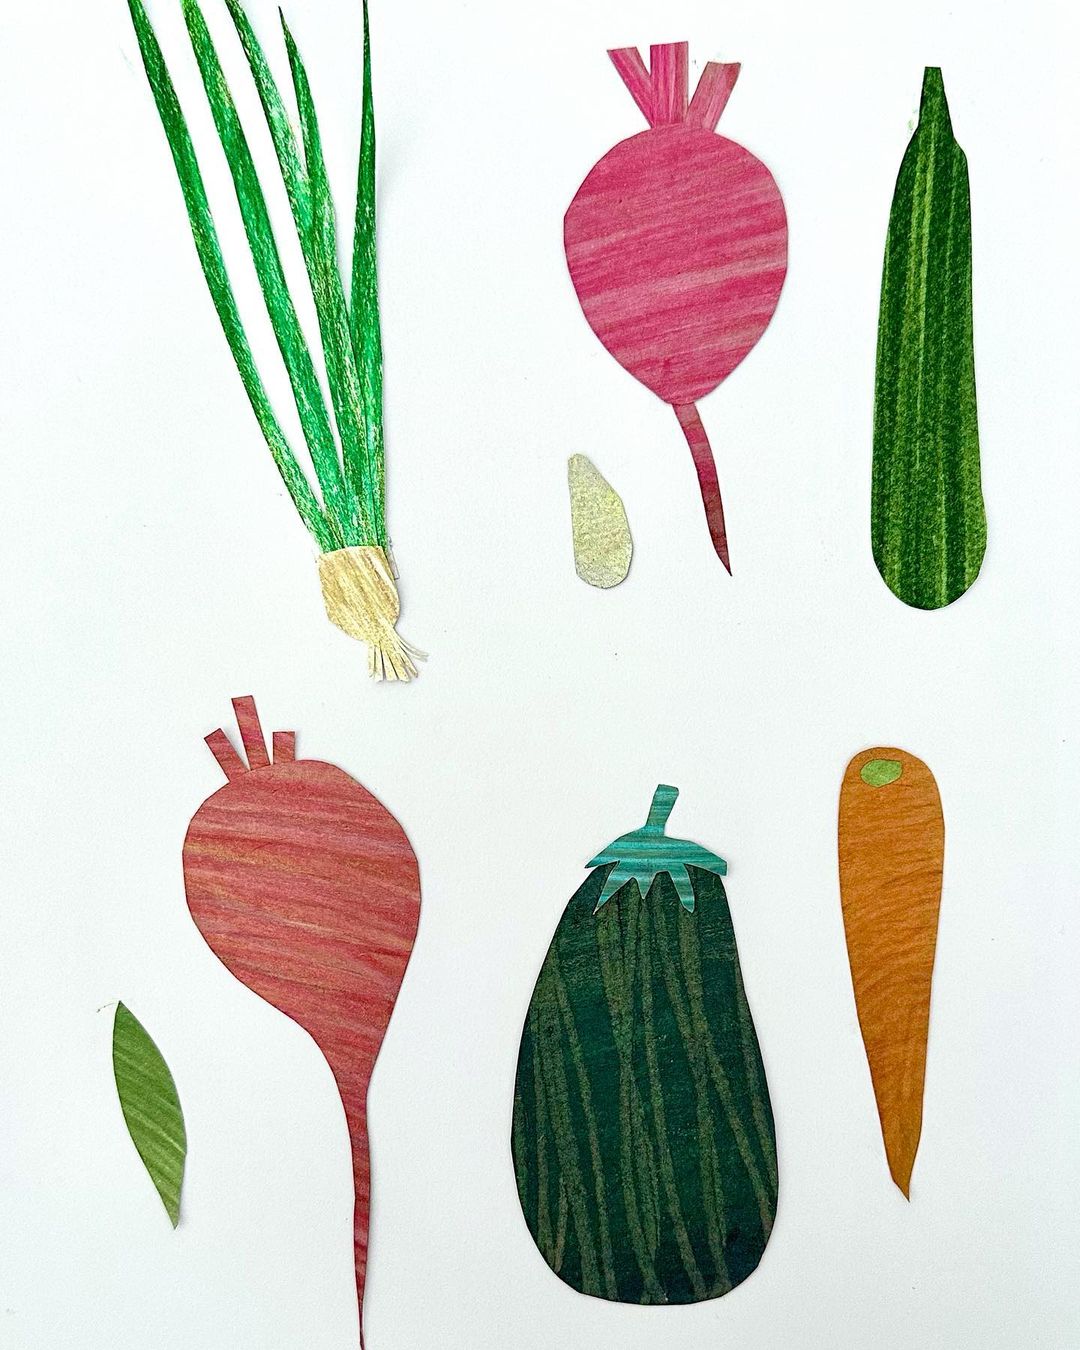 @iris_fogel_ben_hamou collage artwork of vegetables